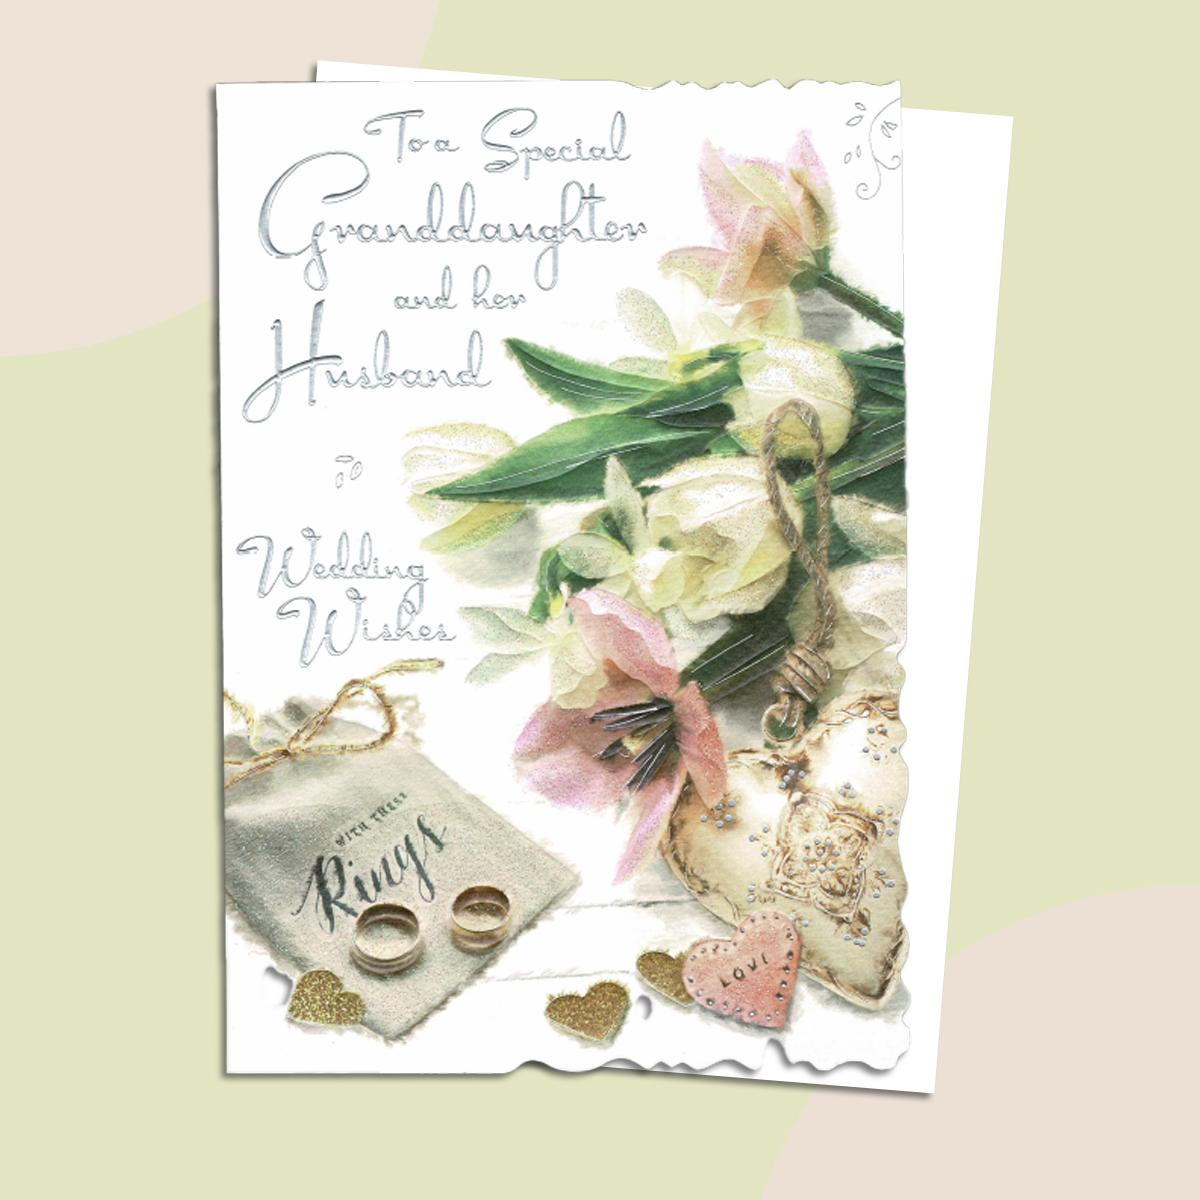 Granddaughter And Husband Wedding Card Alongside Its White Envelope